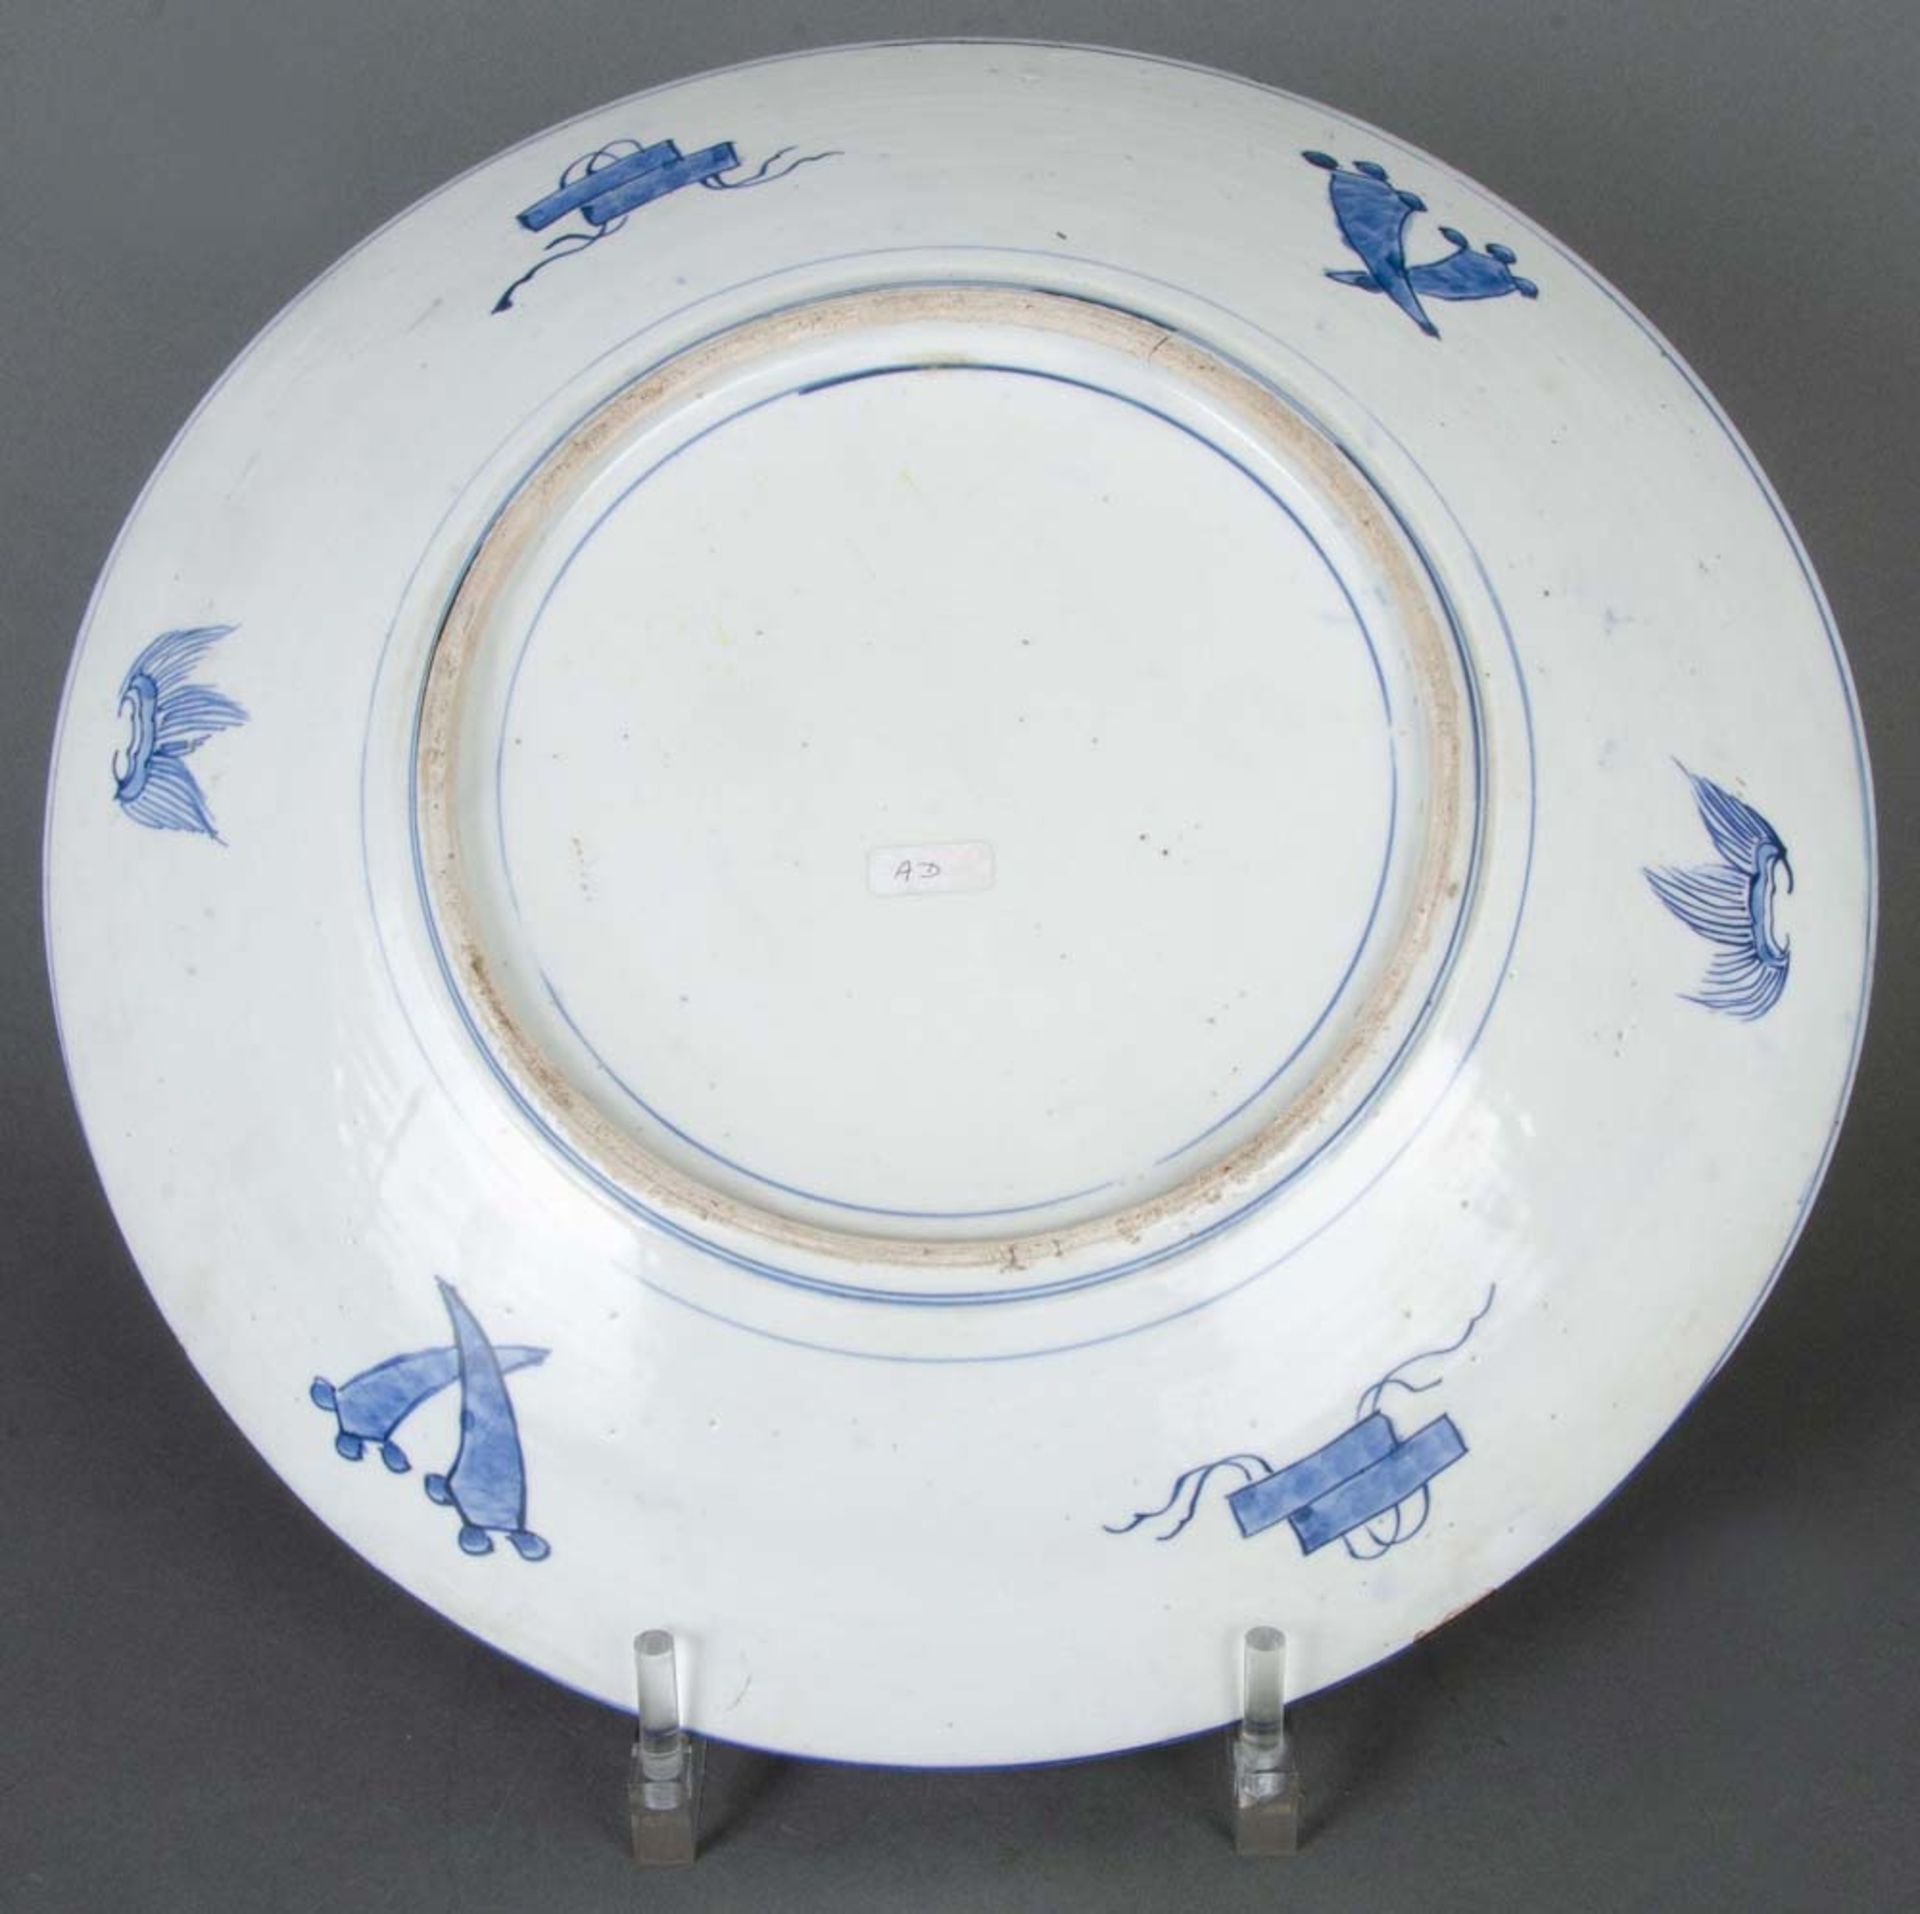 Große Platte. Japan. Porzellan, bunt floral bemalt, verso unterglasurblau bemalt, D=41 cm. - Bild 2 aus 2